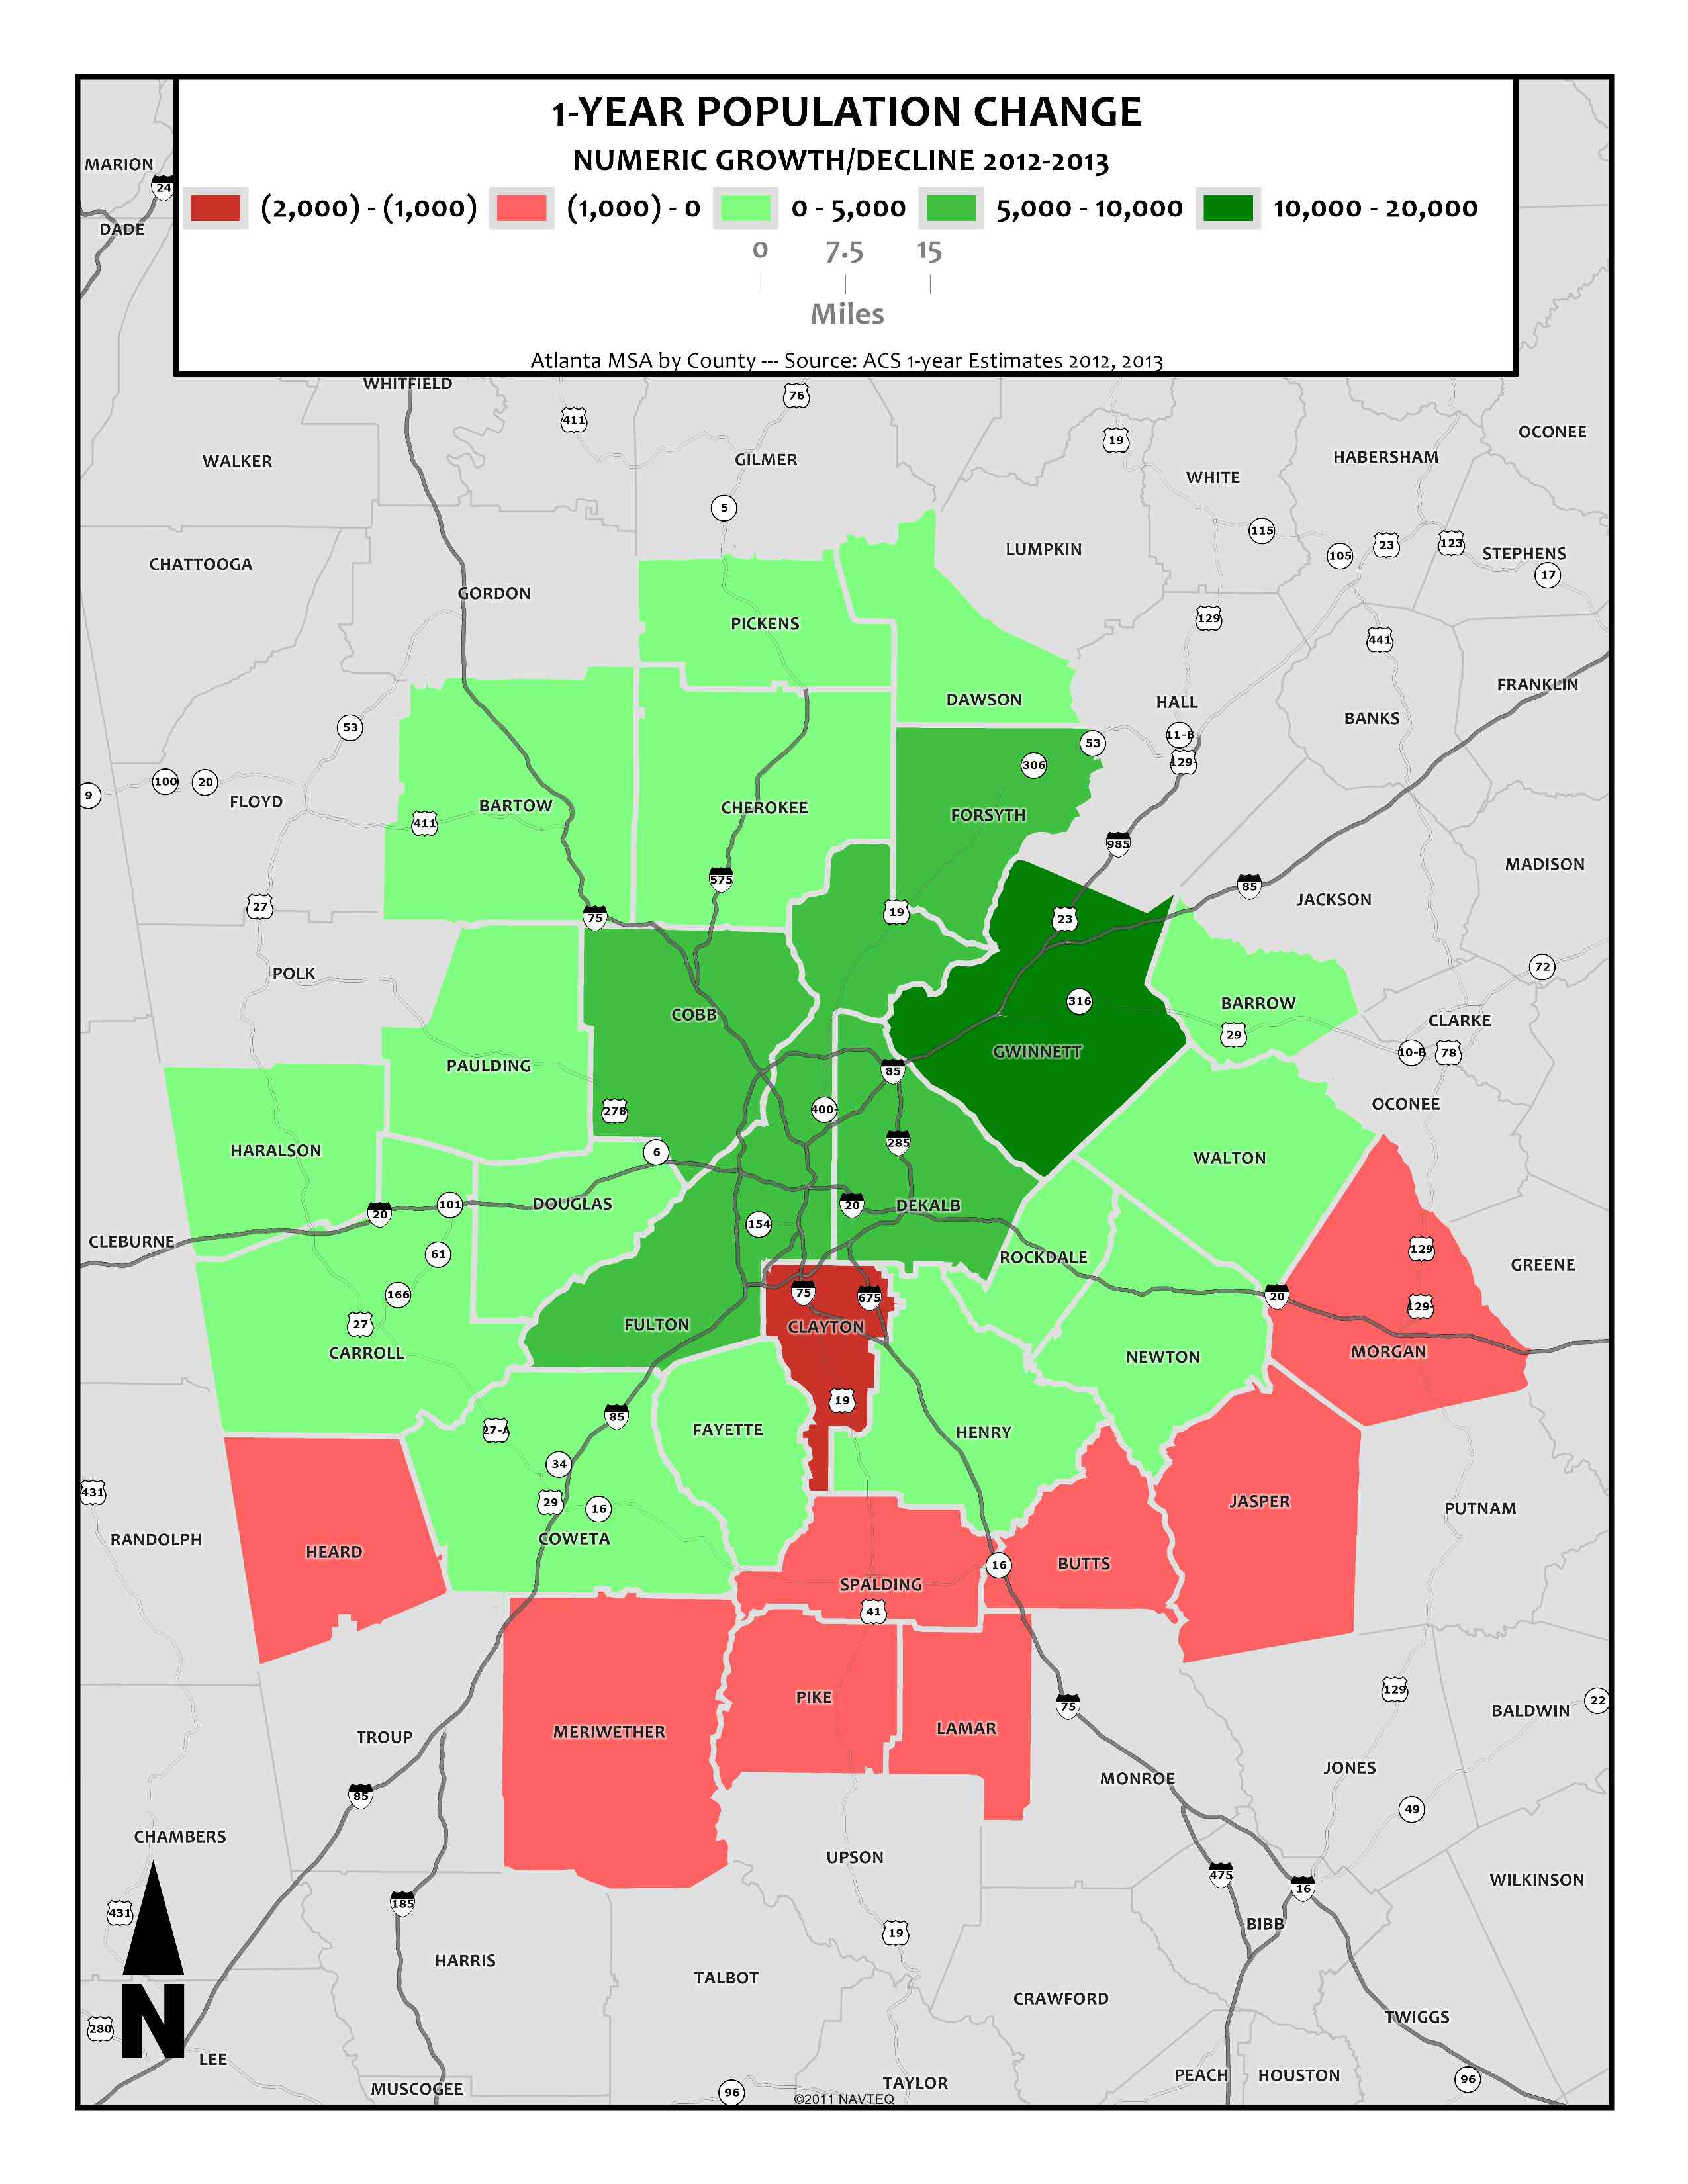 1-Year Population Numeric Change, 2012-2013 – metro counties